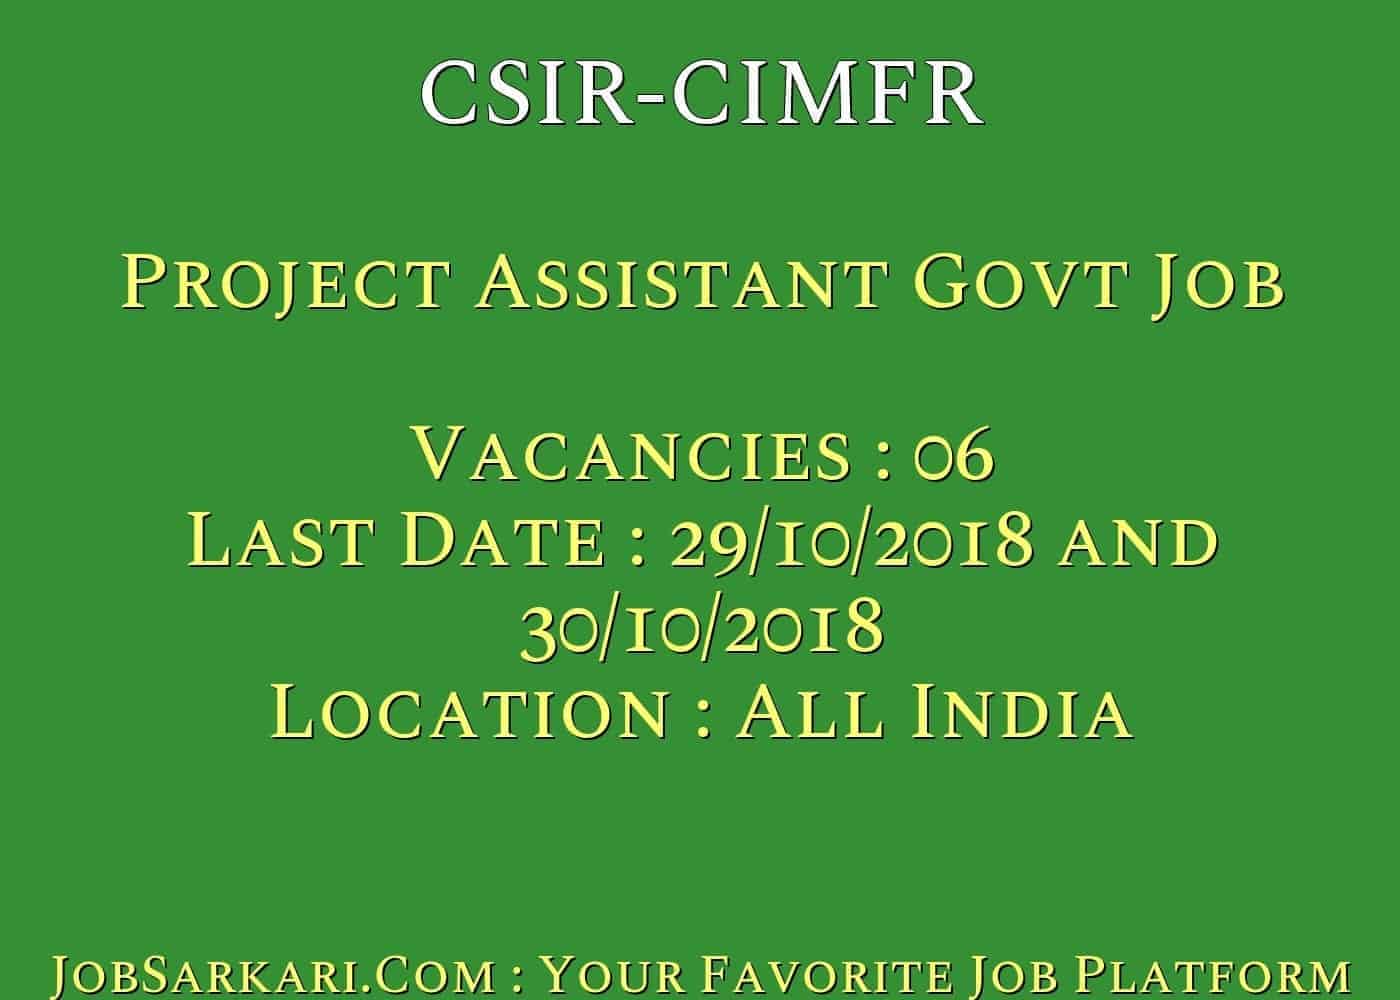 CSIR-CIMFR Recruitment 2018 for Project Assistant Govt Job